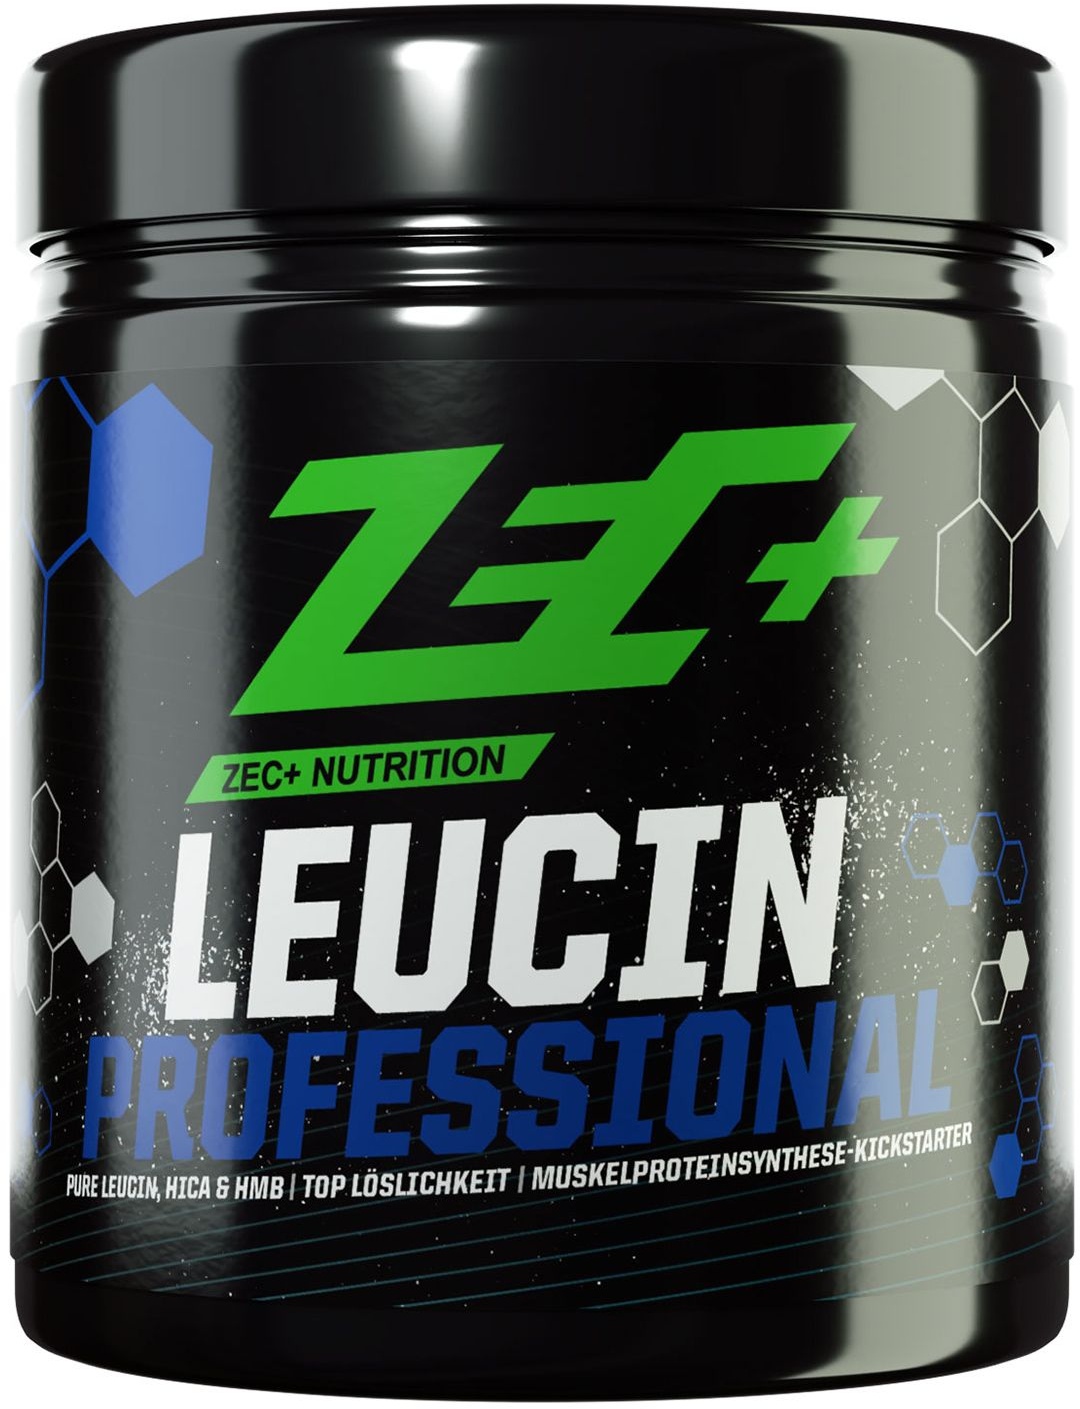 Zec+ Leucin Professional Pulver Neutral 270 g